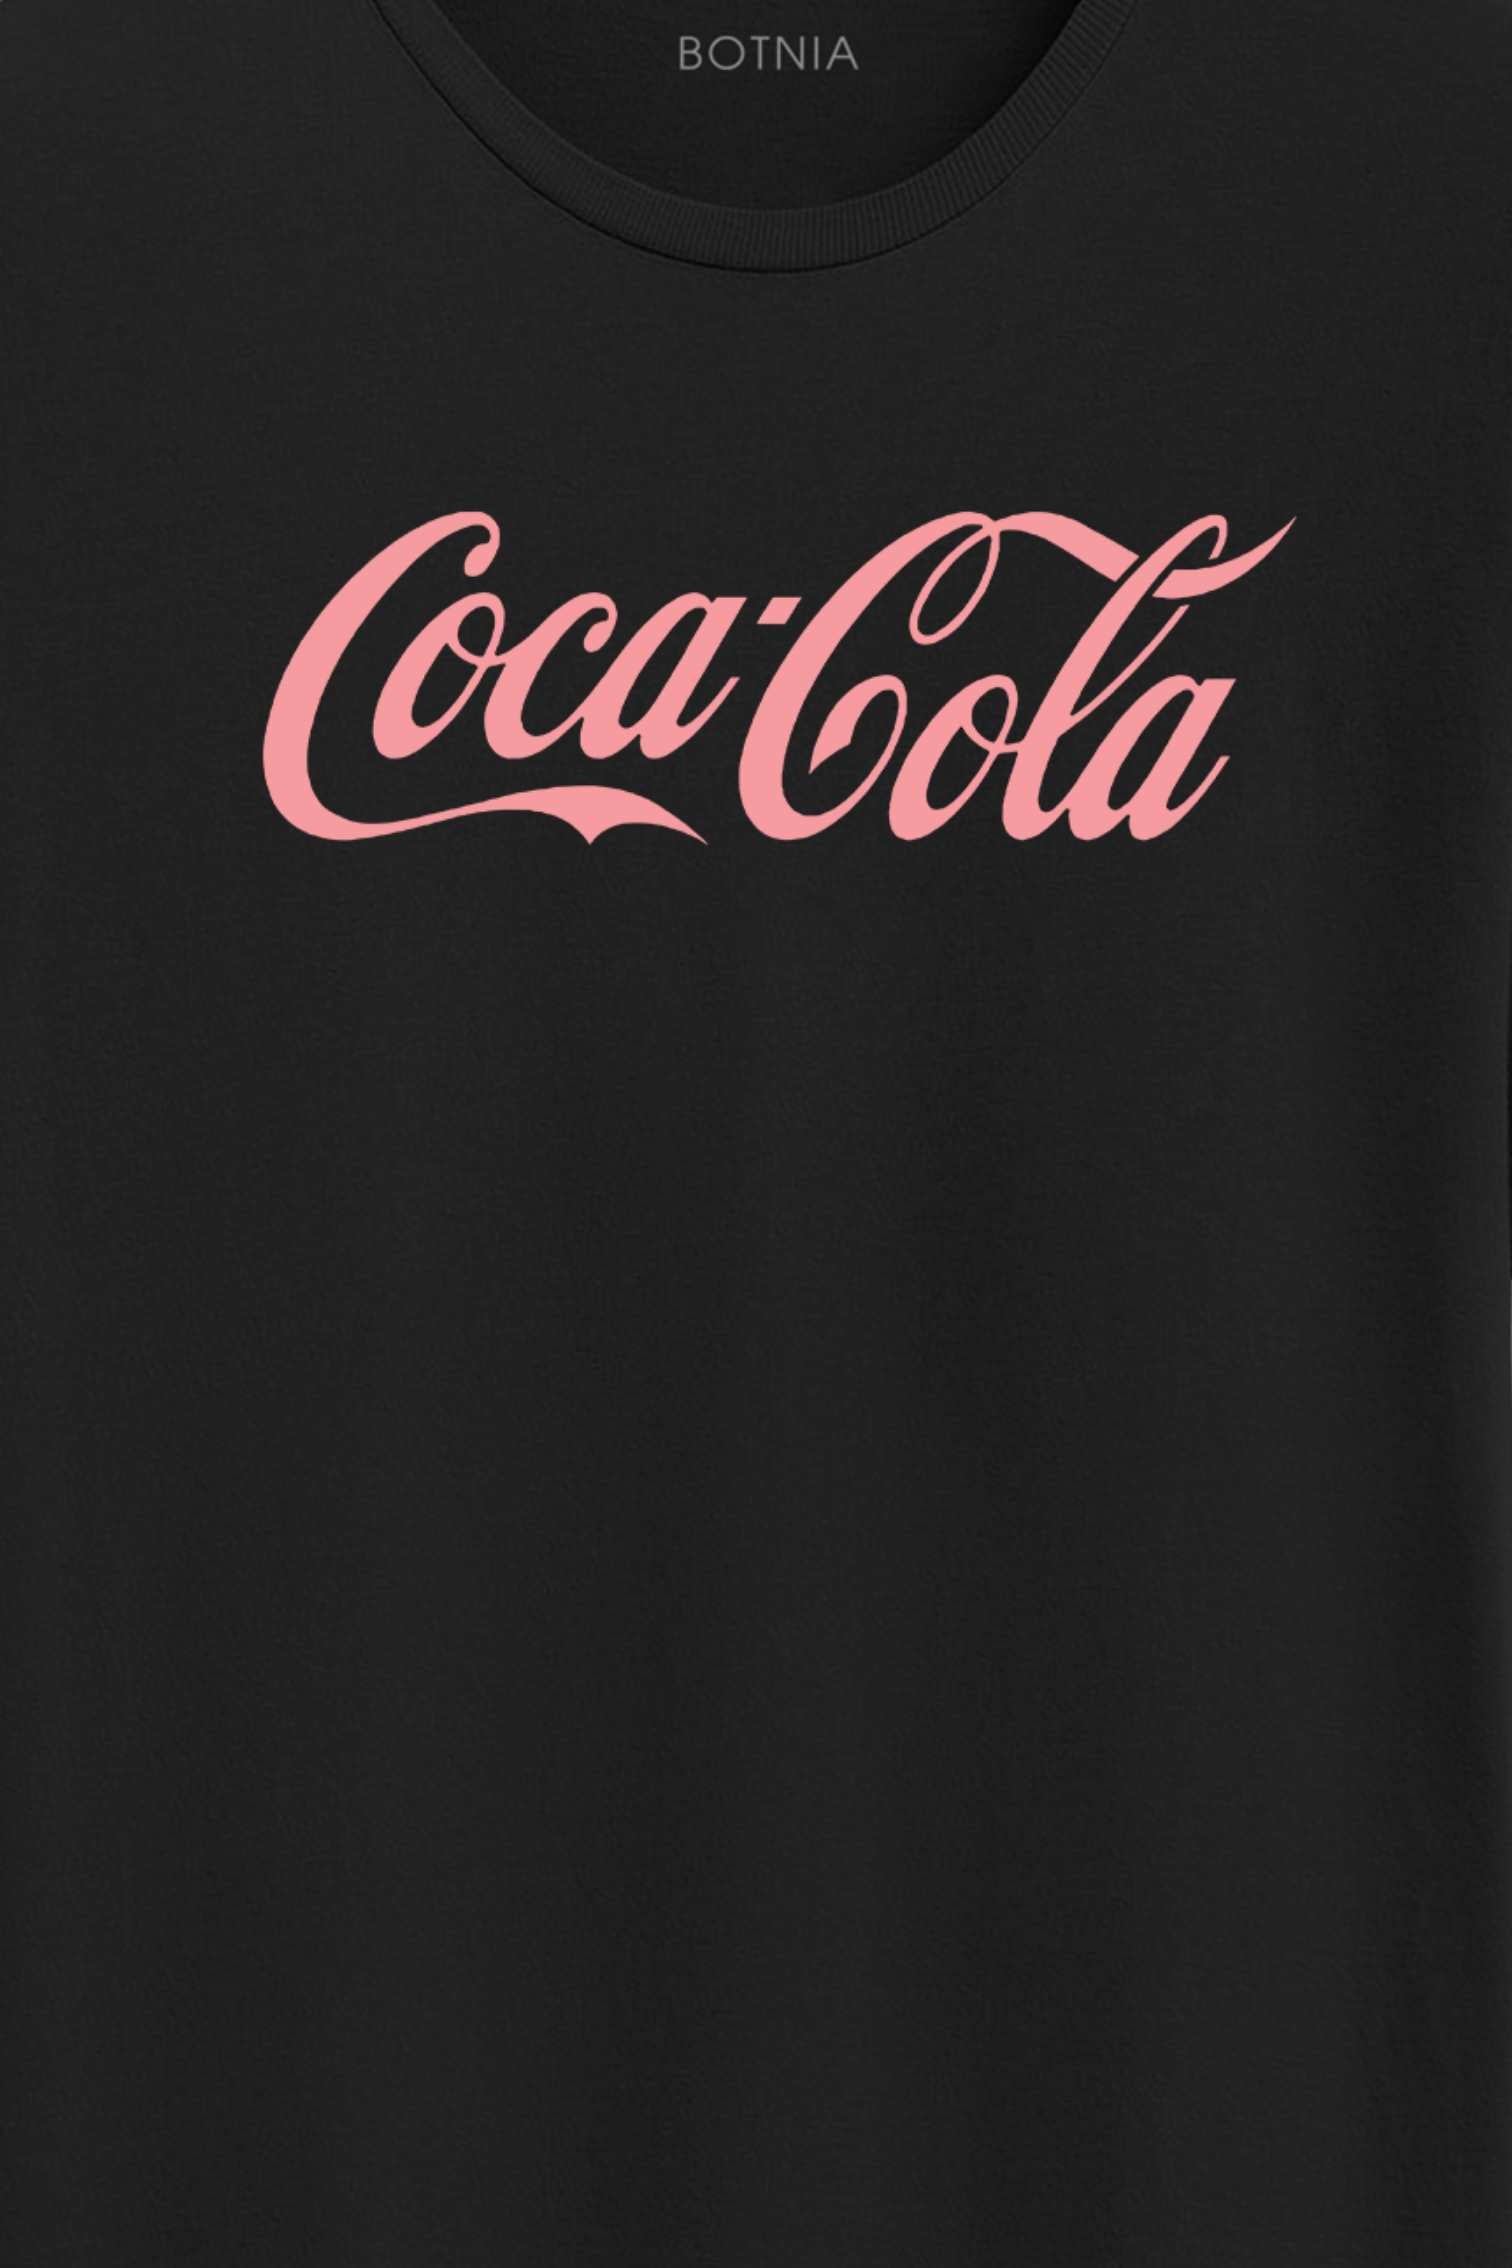 Coca-Cola Half sleeve t-shirt